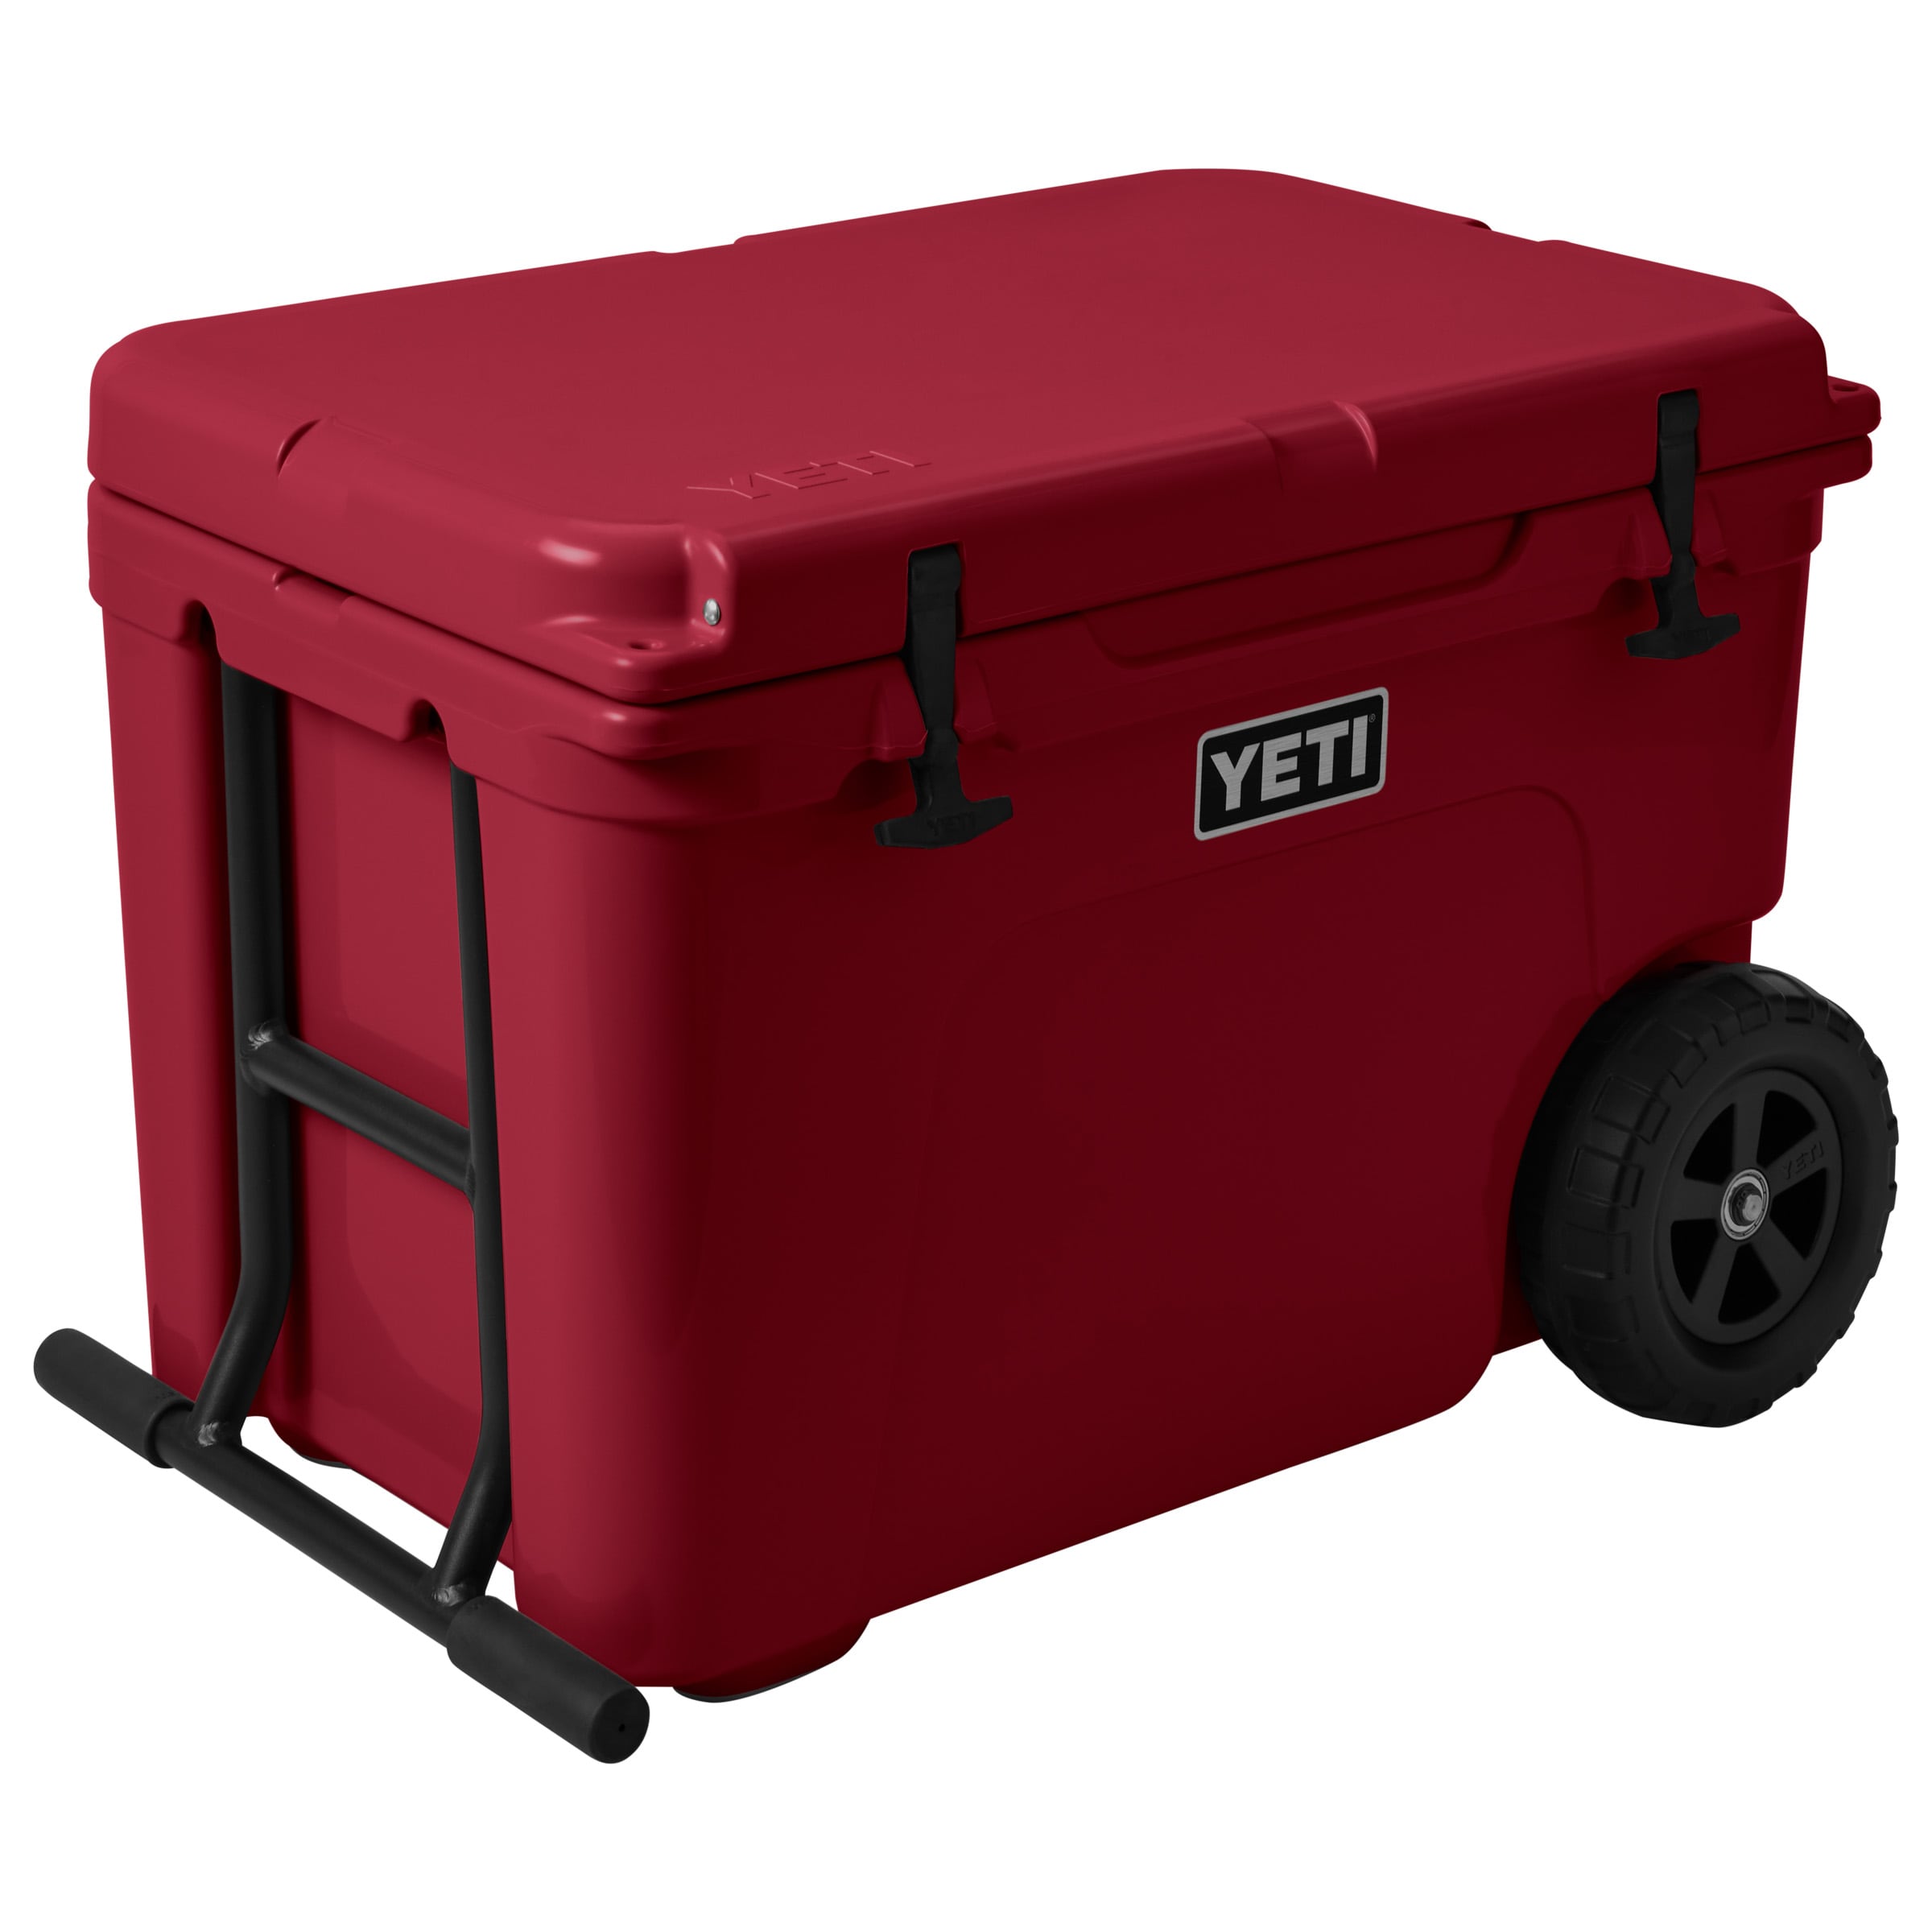 YETI / Tundra 35 Hard Cooler - Harvest Red